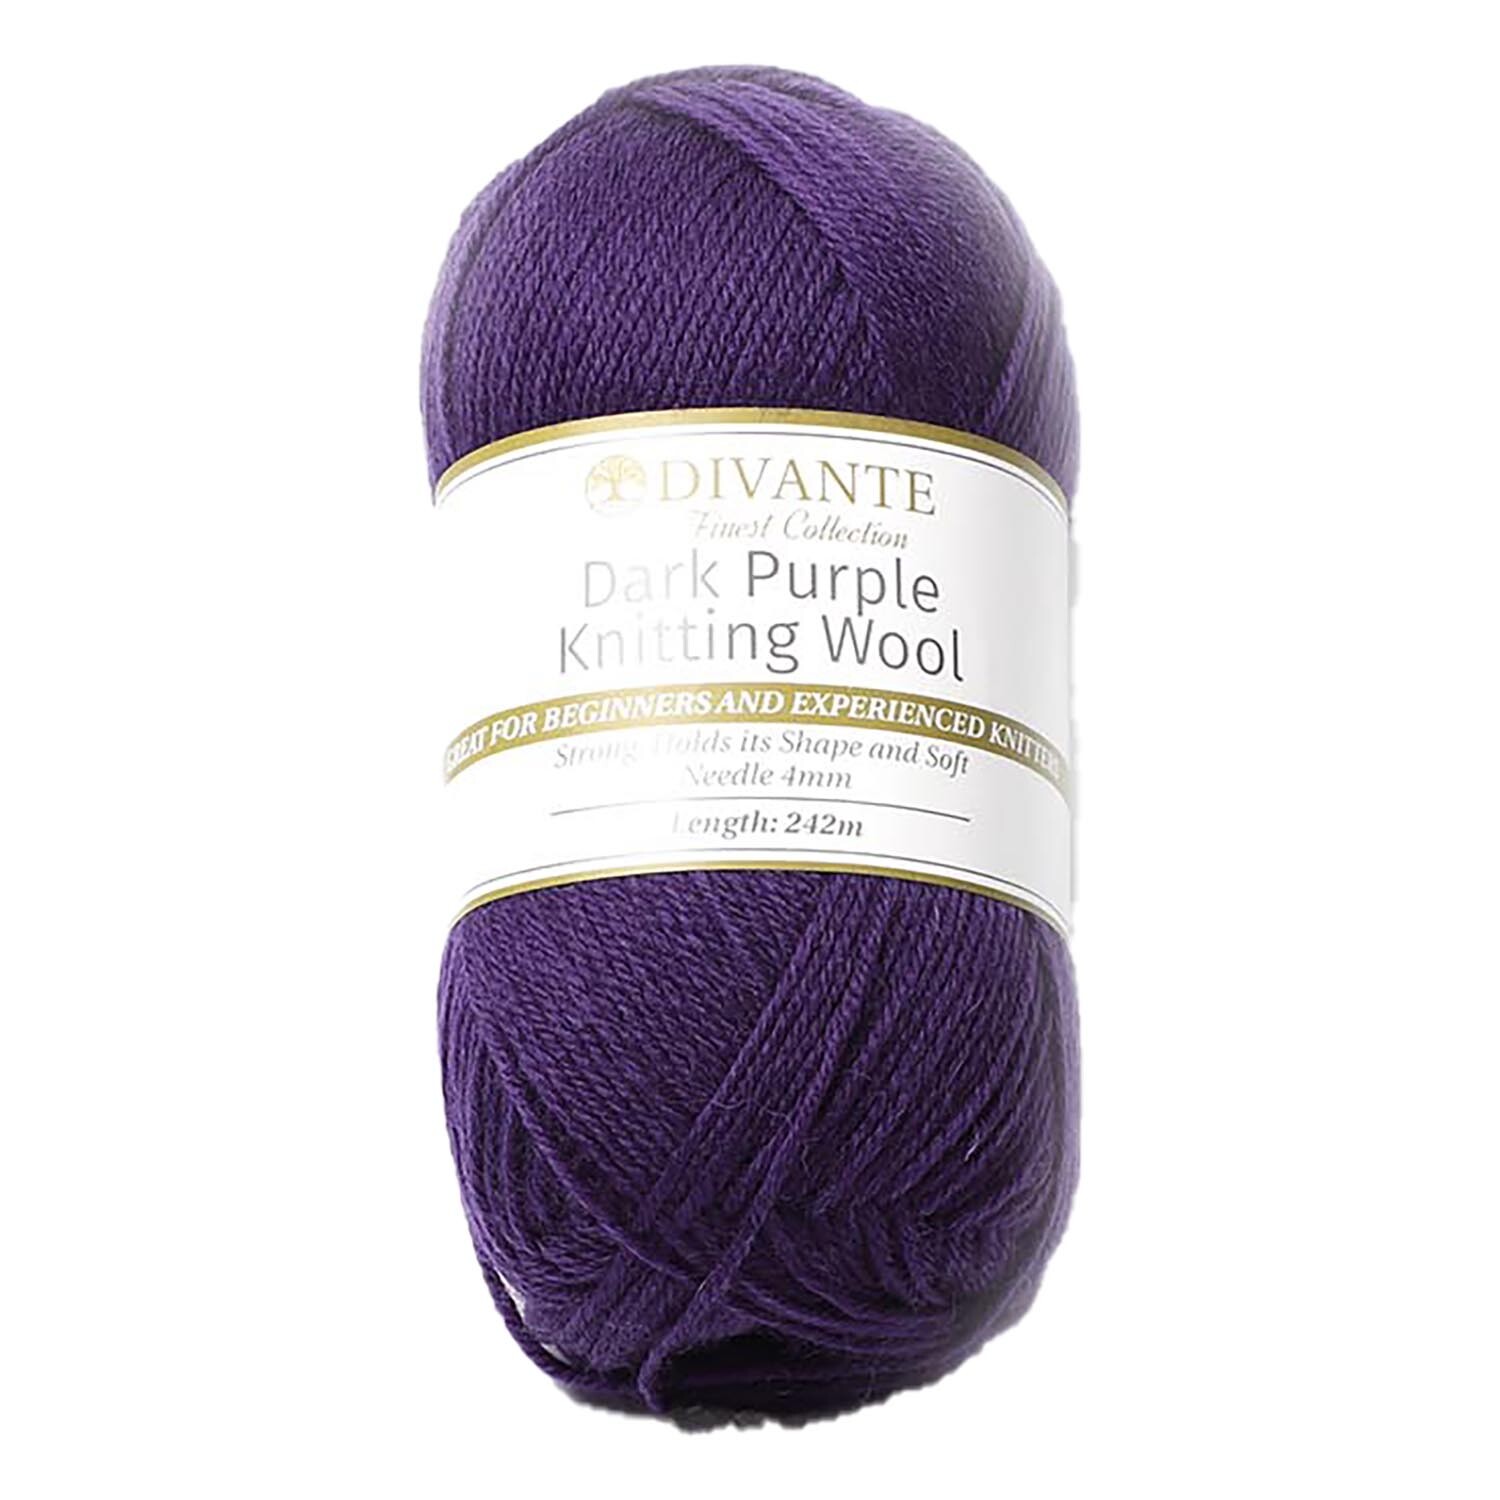 Divante Knitting Wool - Dark Purple Image